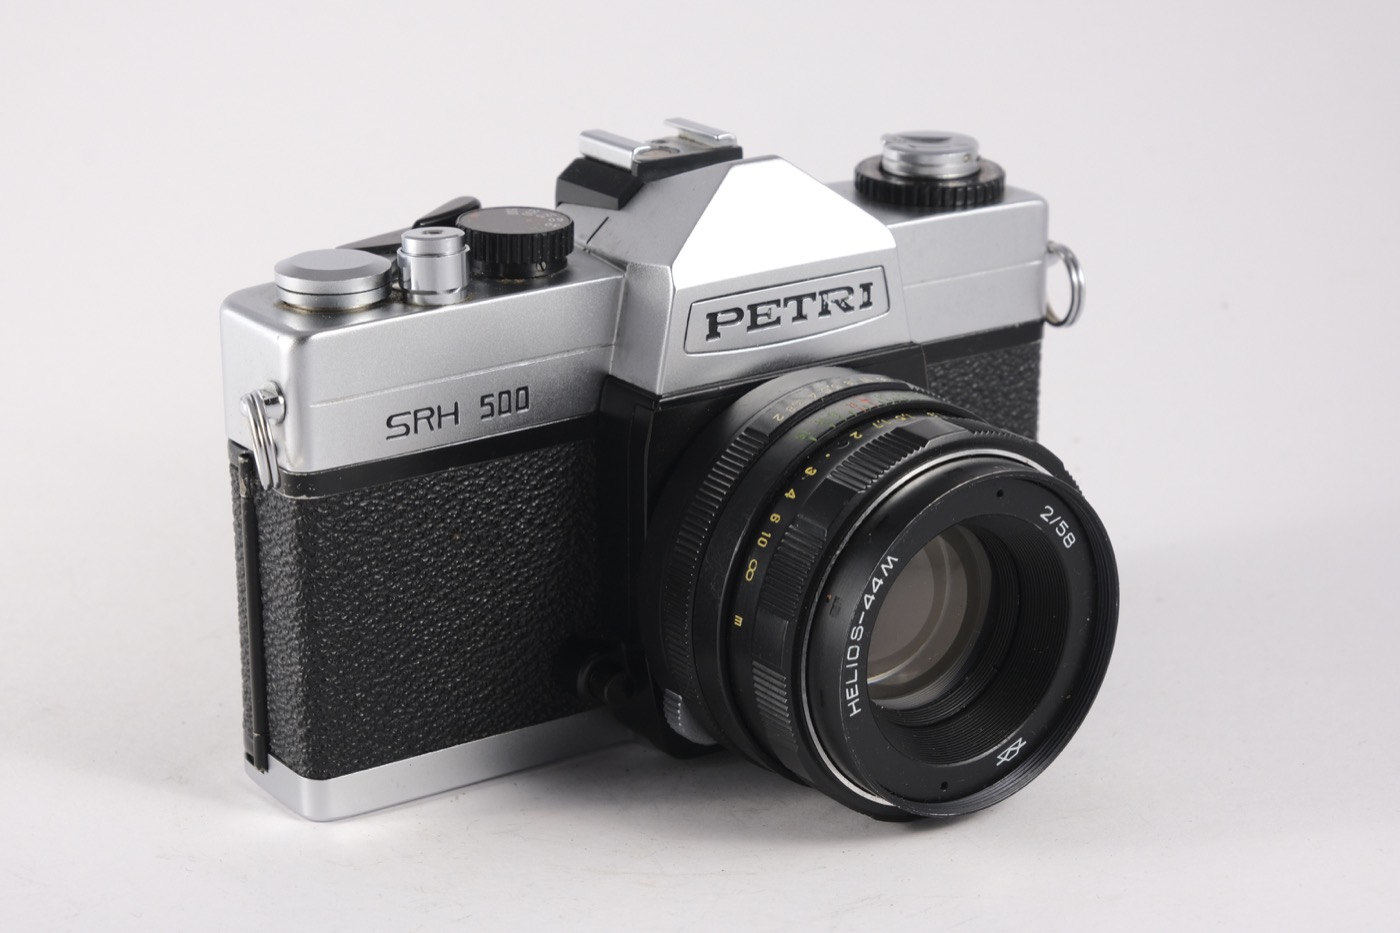 Petri SRH 500 camera with Helios 44M lens